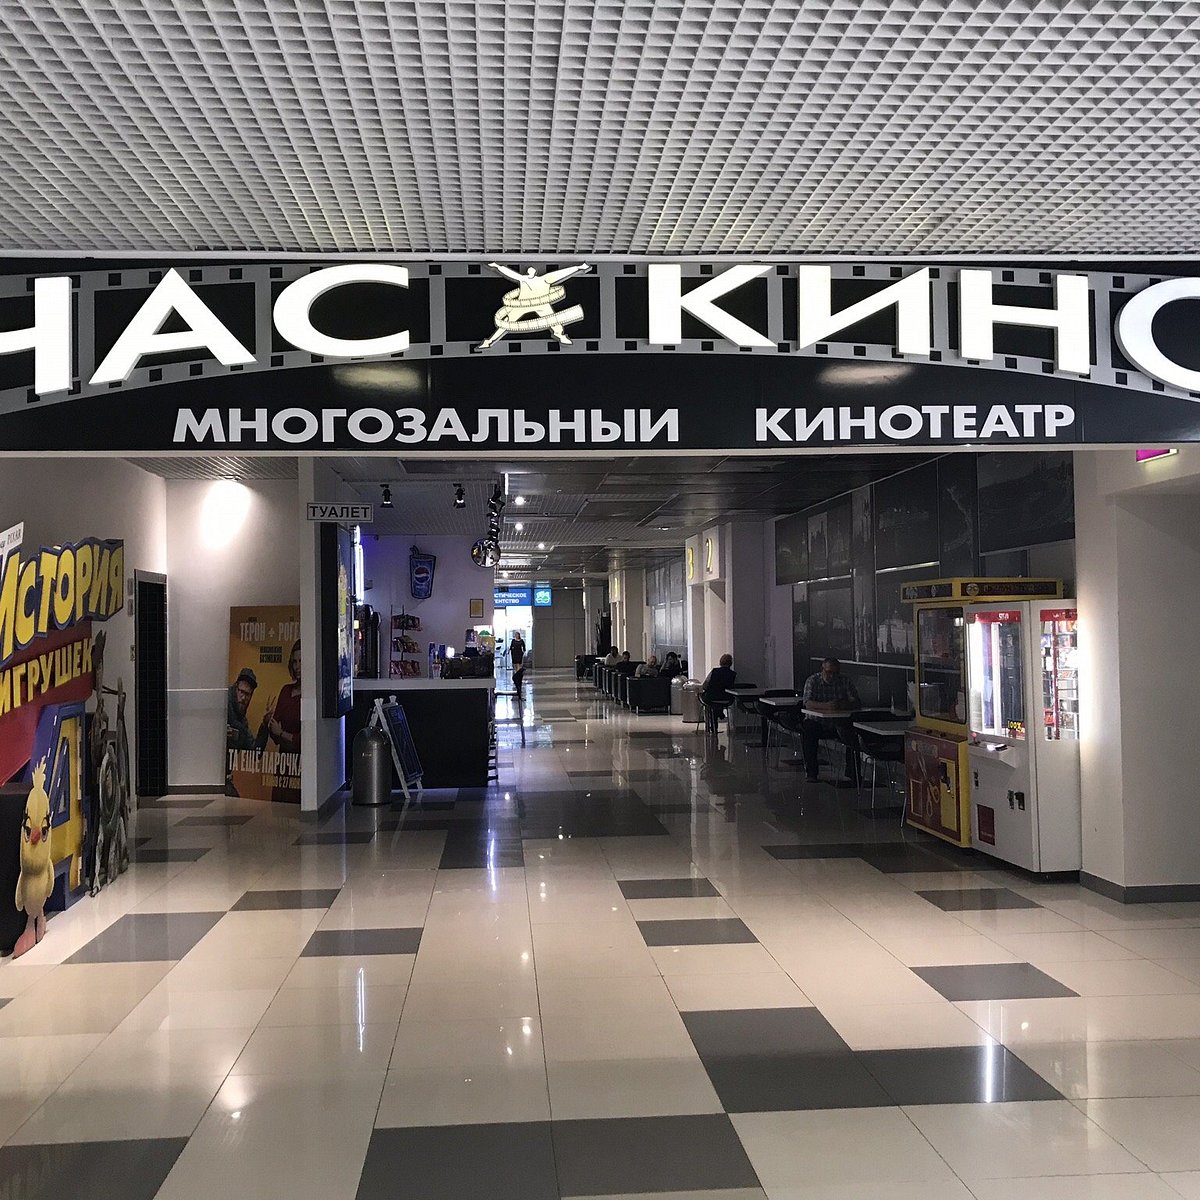 Кинотеатр свиблово сеанс. Торговый центр Свиблово, Москва. ТЦ Свиблово кинотеатр.